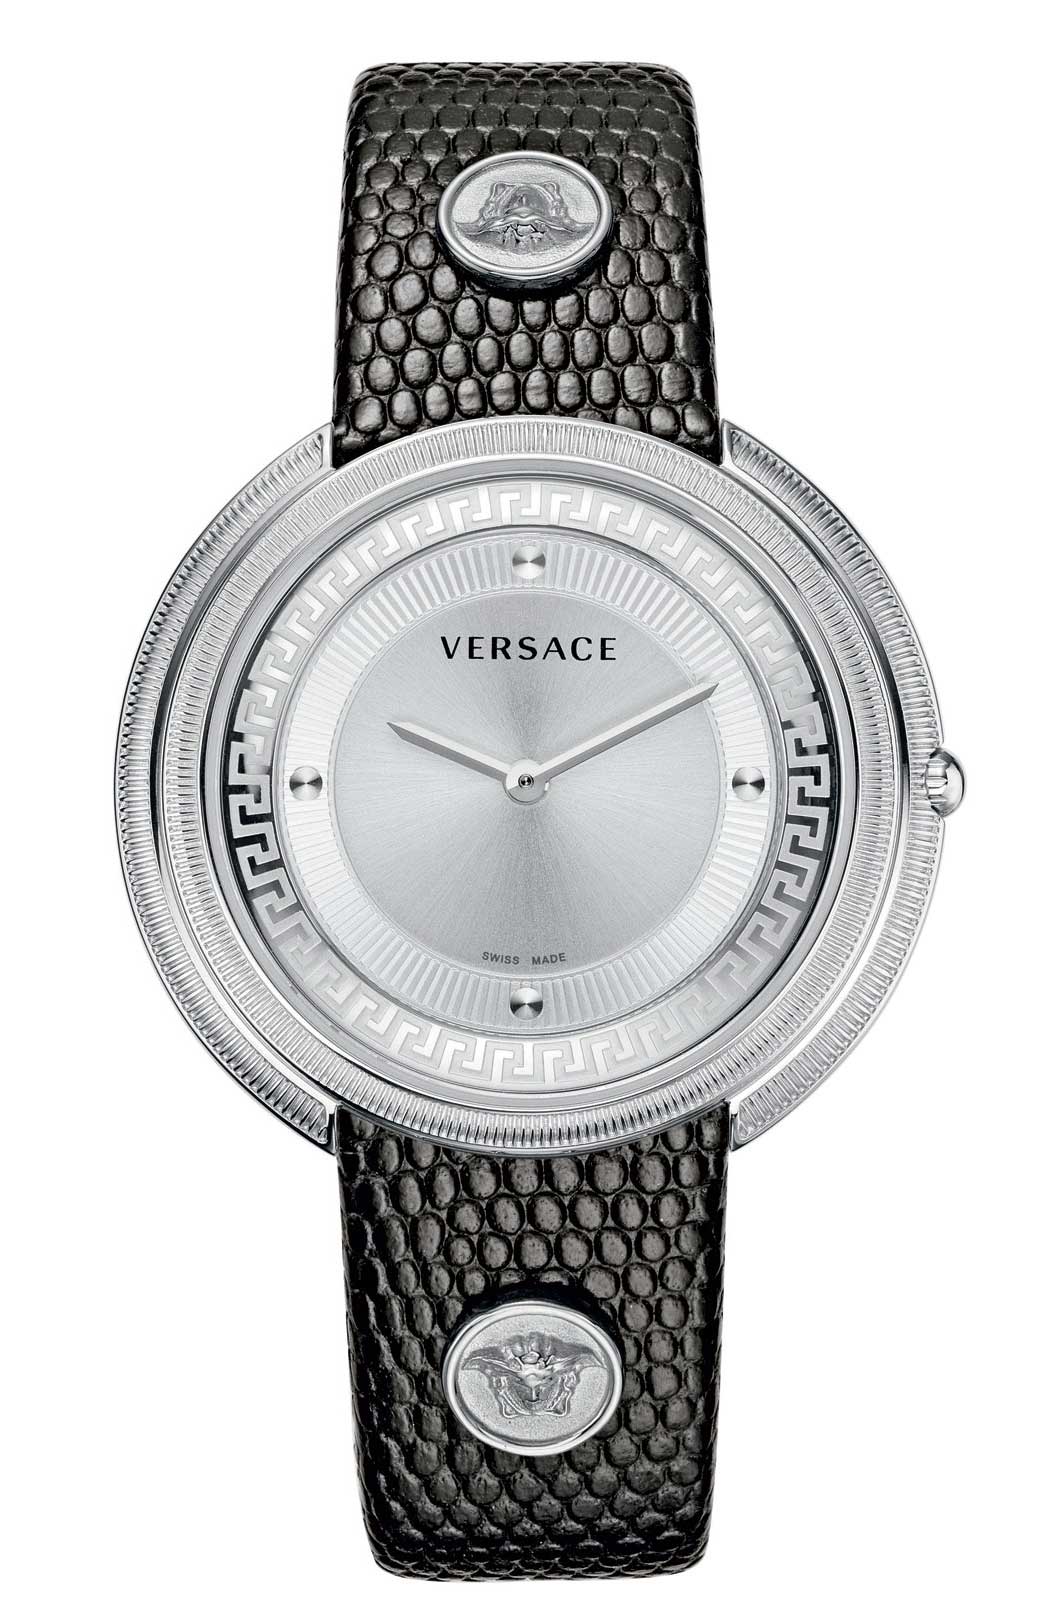 Versace QUARTZ watch 762 BLACK CALF STRAP LIZARD